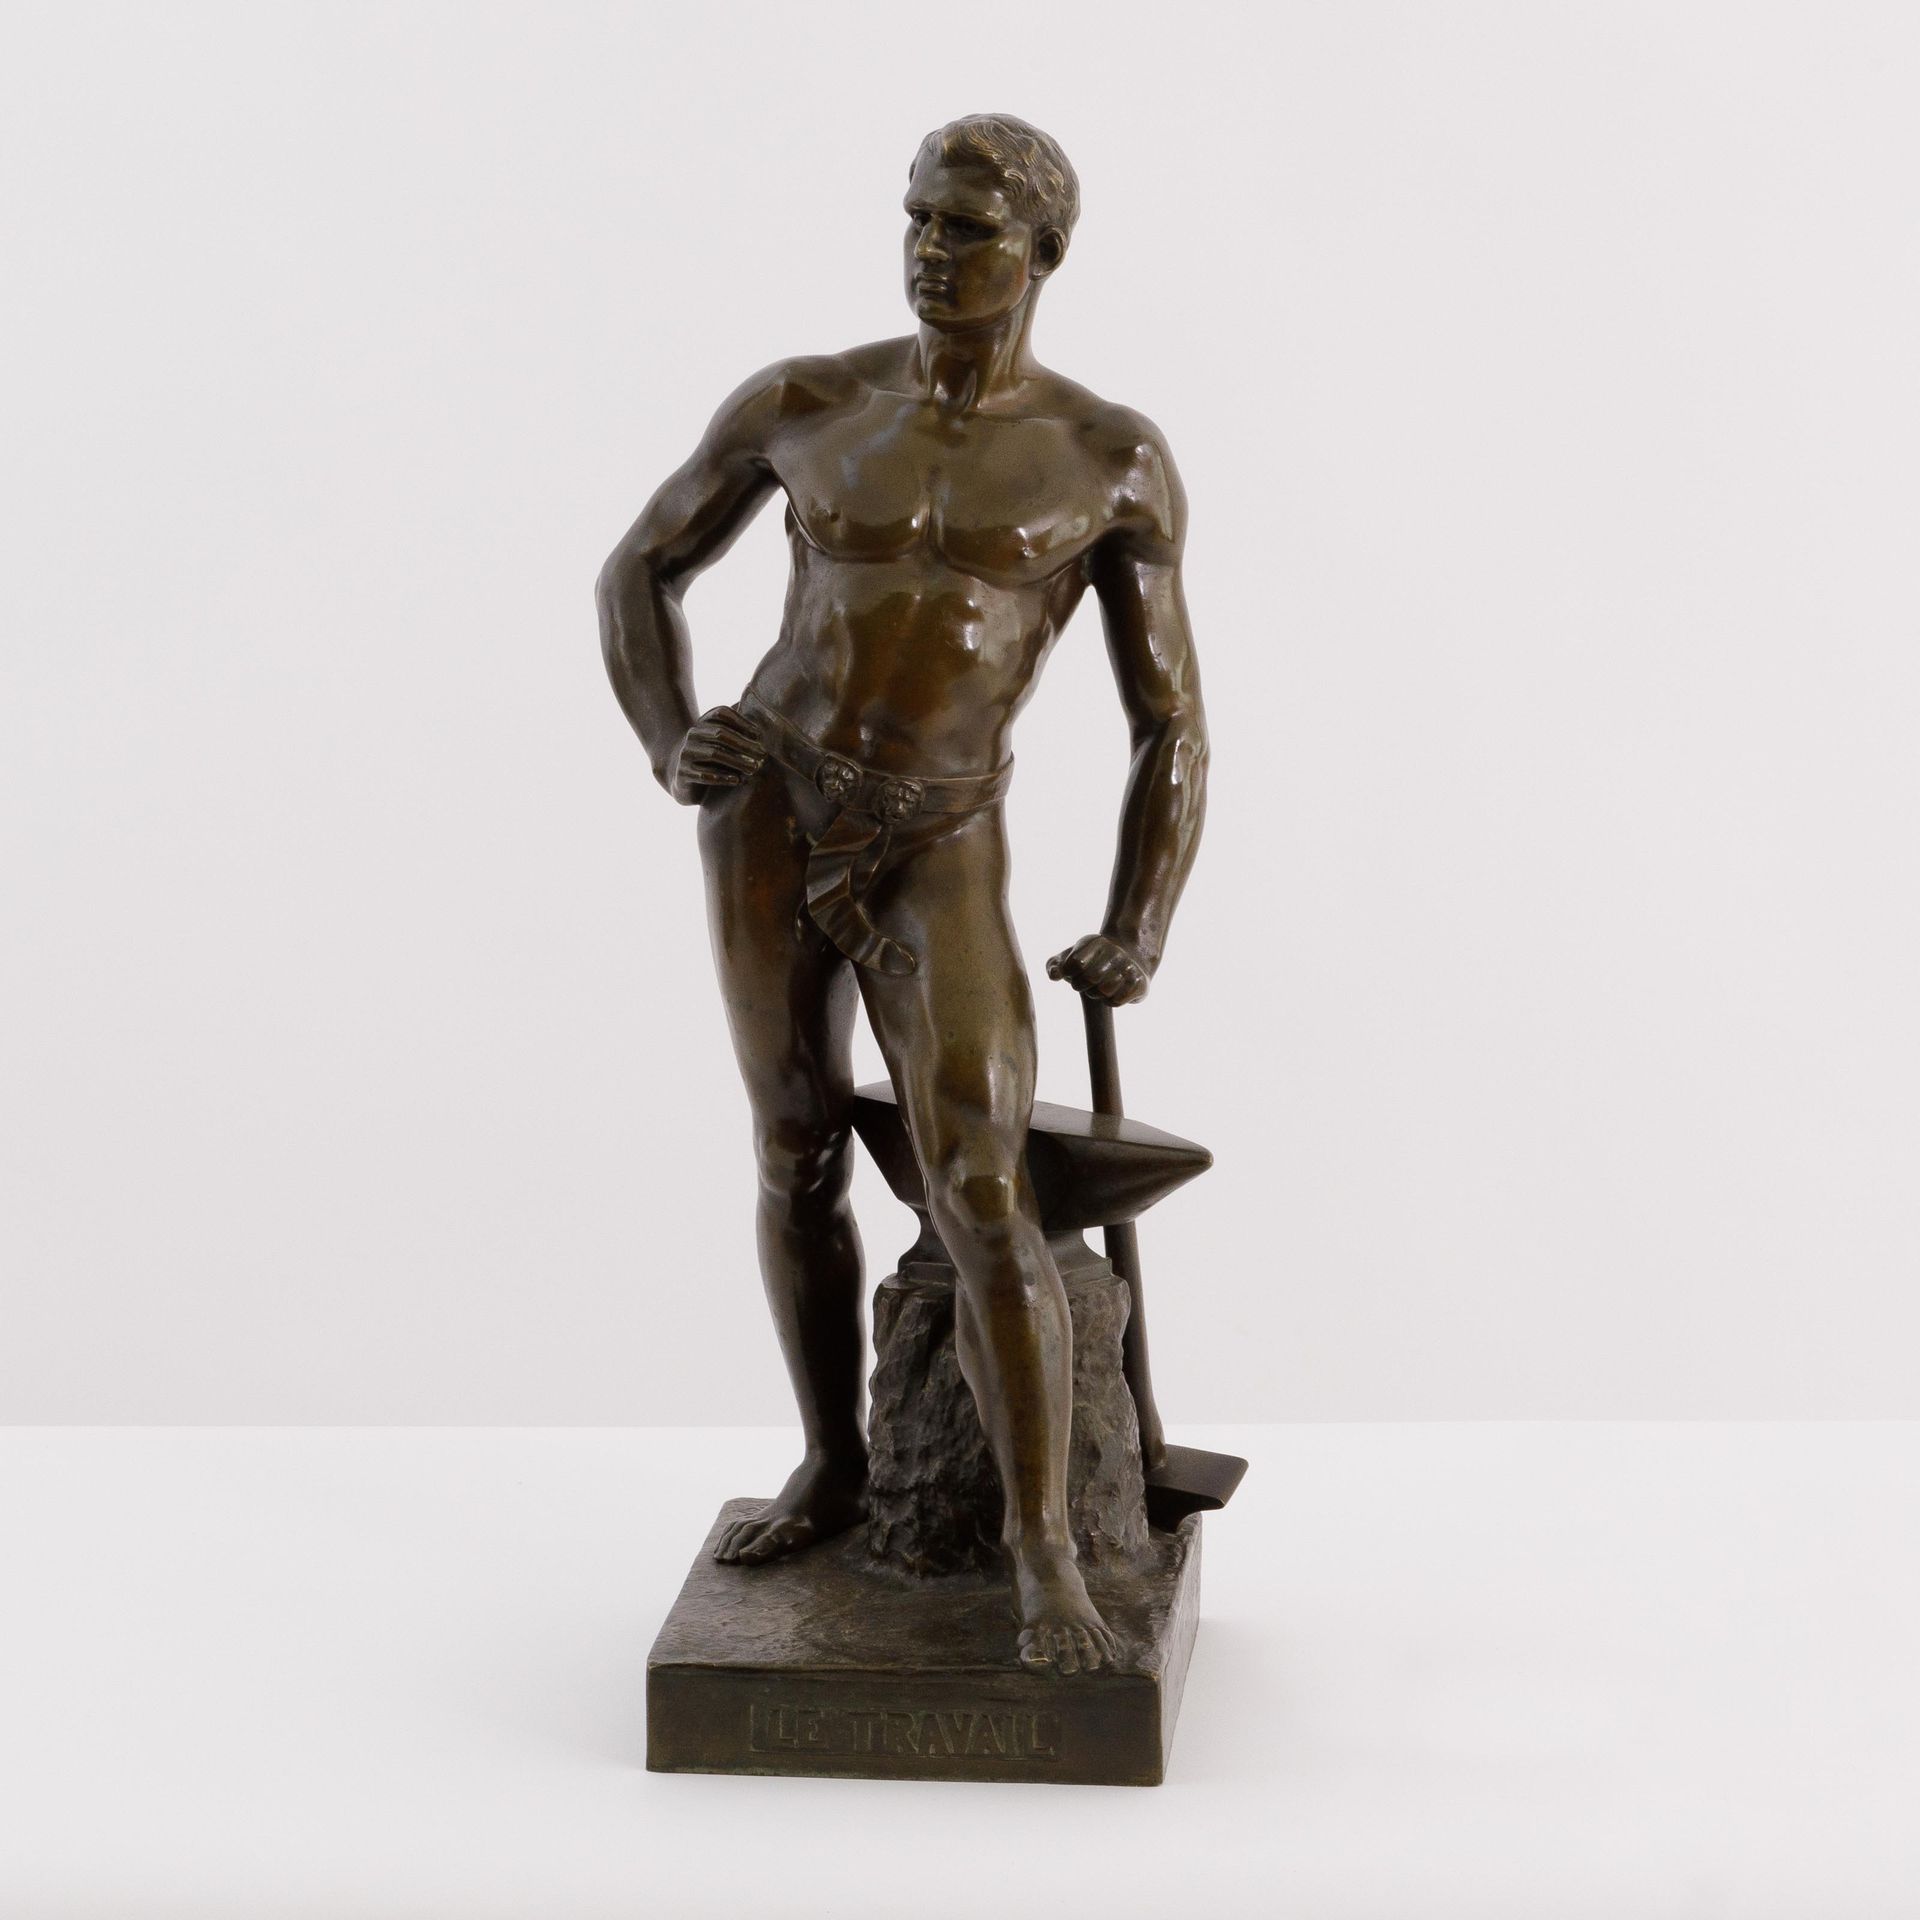 Pierre GRANET (1843-1910) "工作"（Le travail

青铜，棕色铜锈。签名为 "P Granet"。

高：56厘米